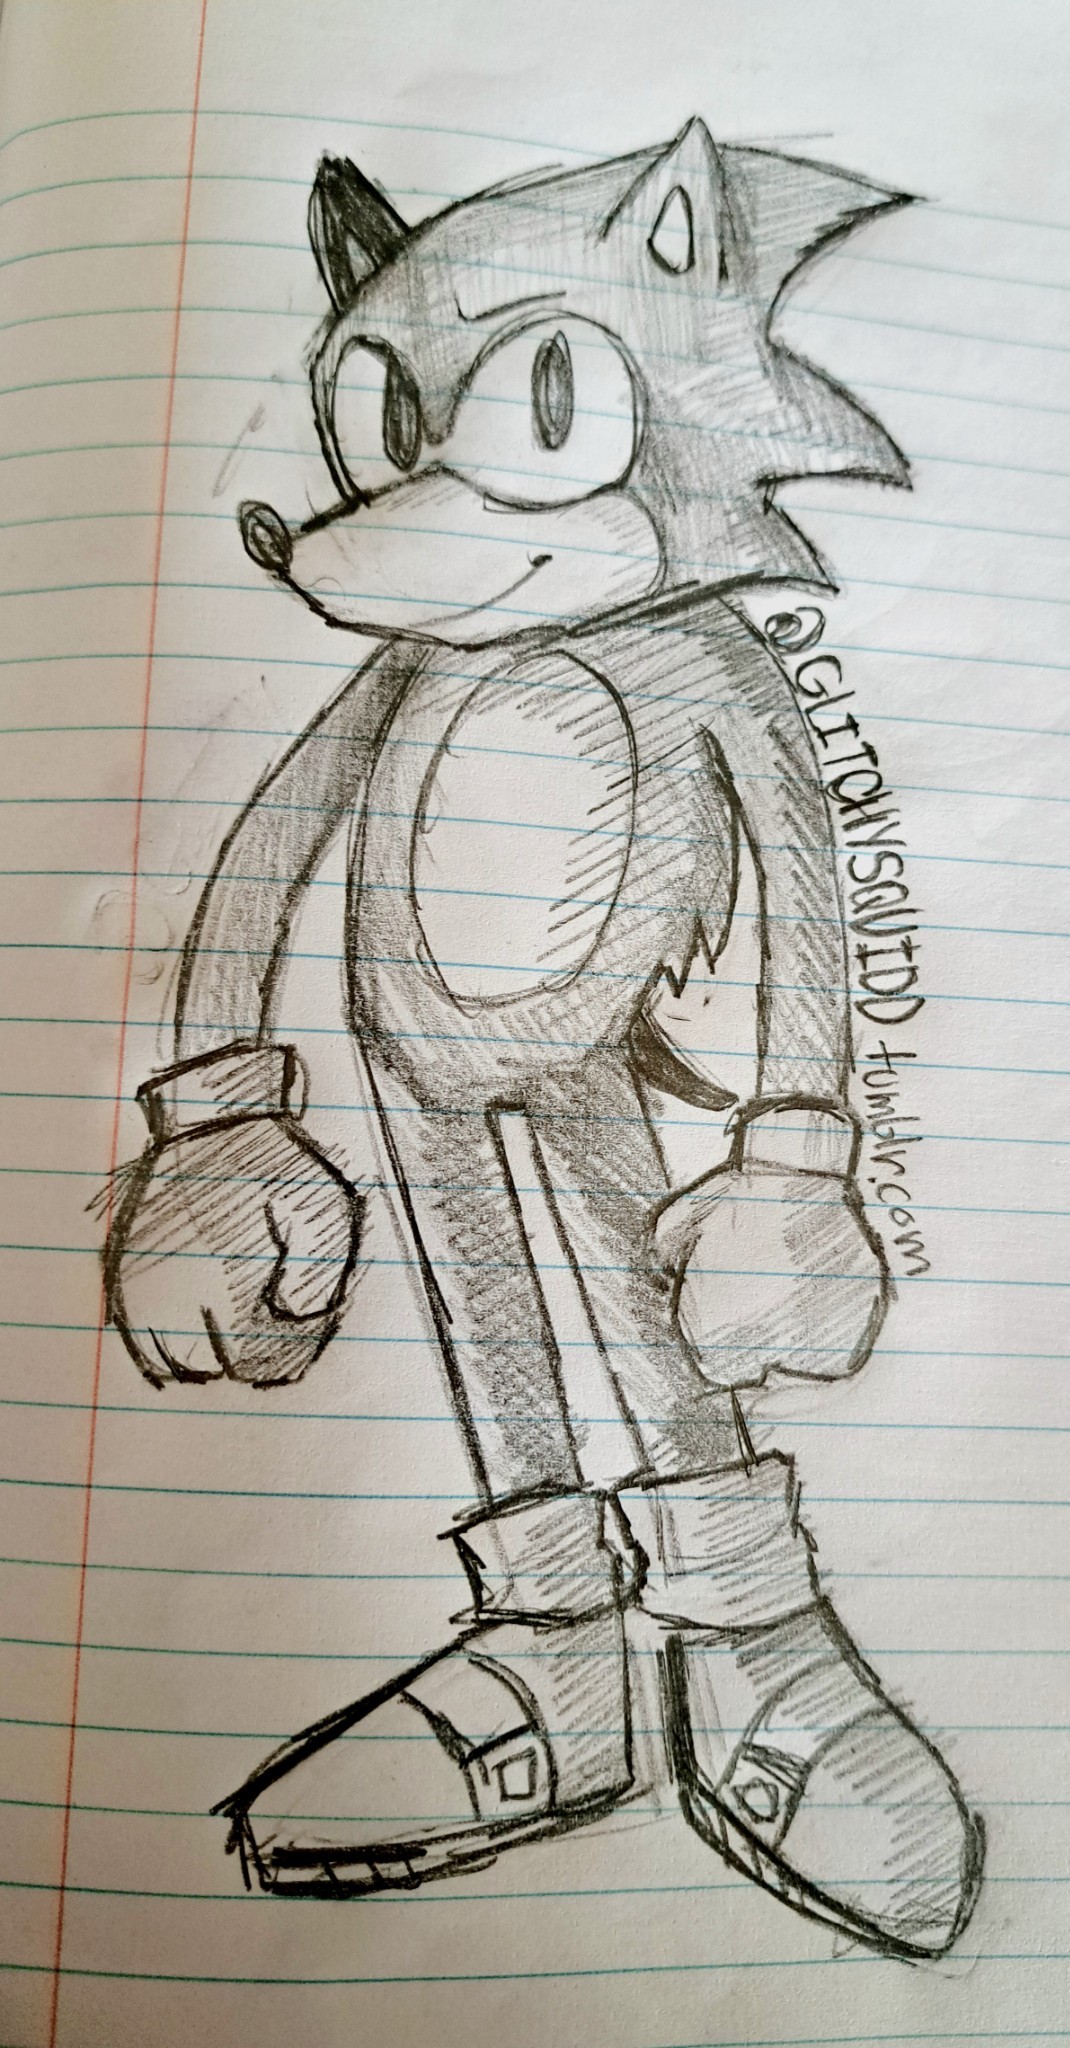 ᐢ. .ᐢ₎ — Got bored n drew sonic in class